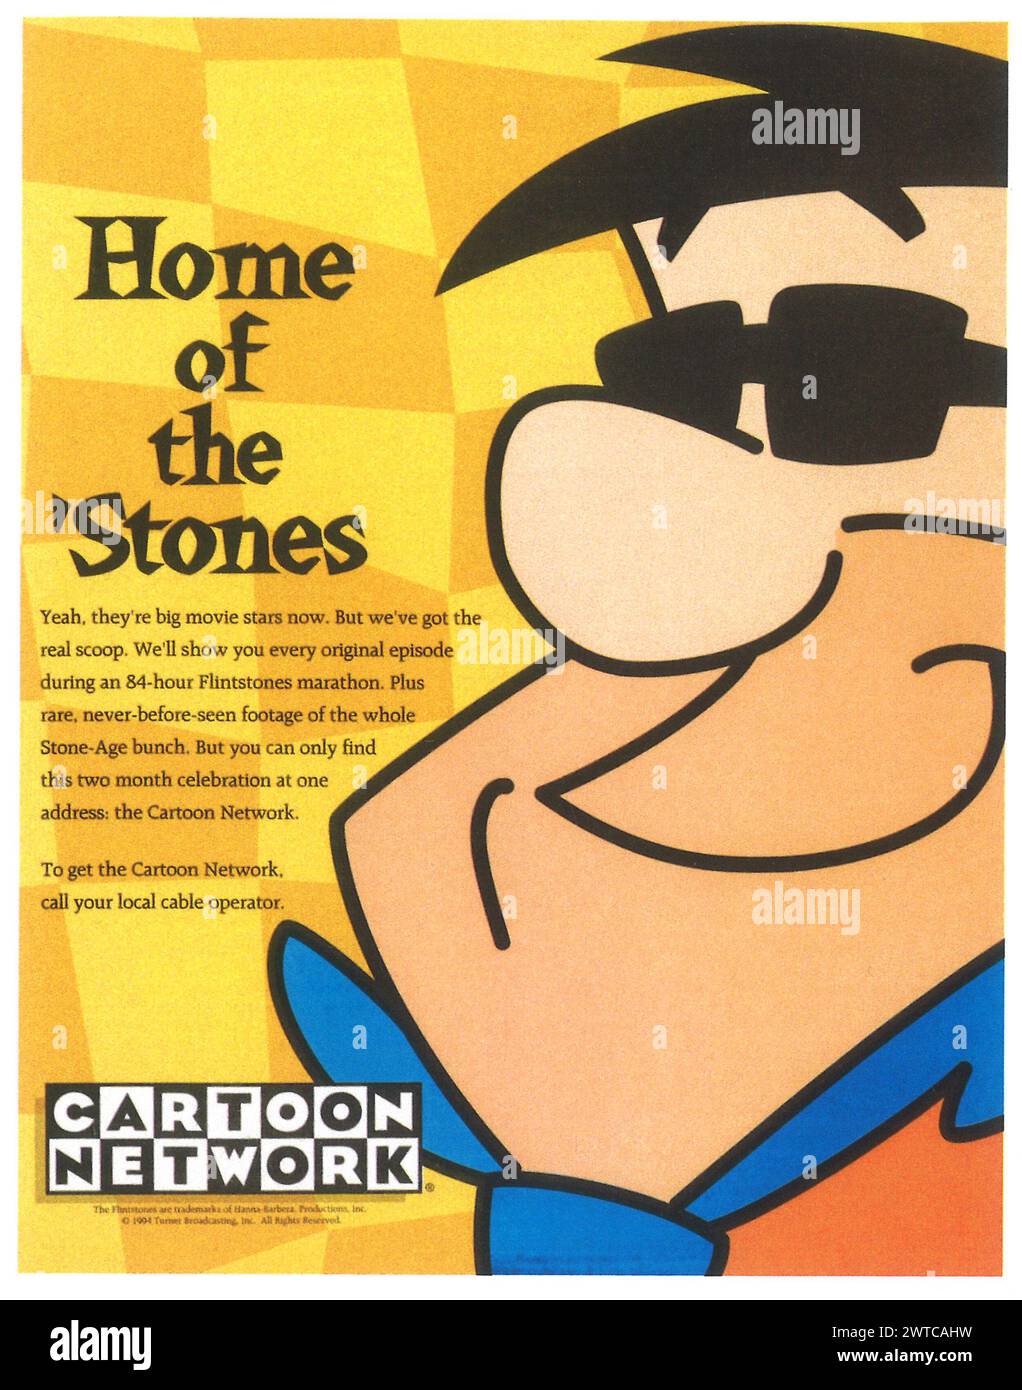 1994 Cartoon Network ad - Home of the Stones - The Flintstones Stock Photo